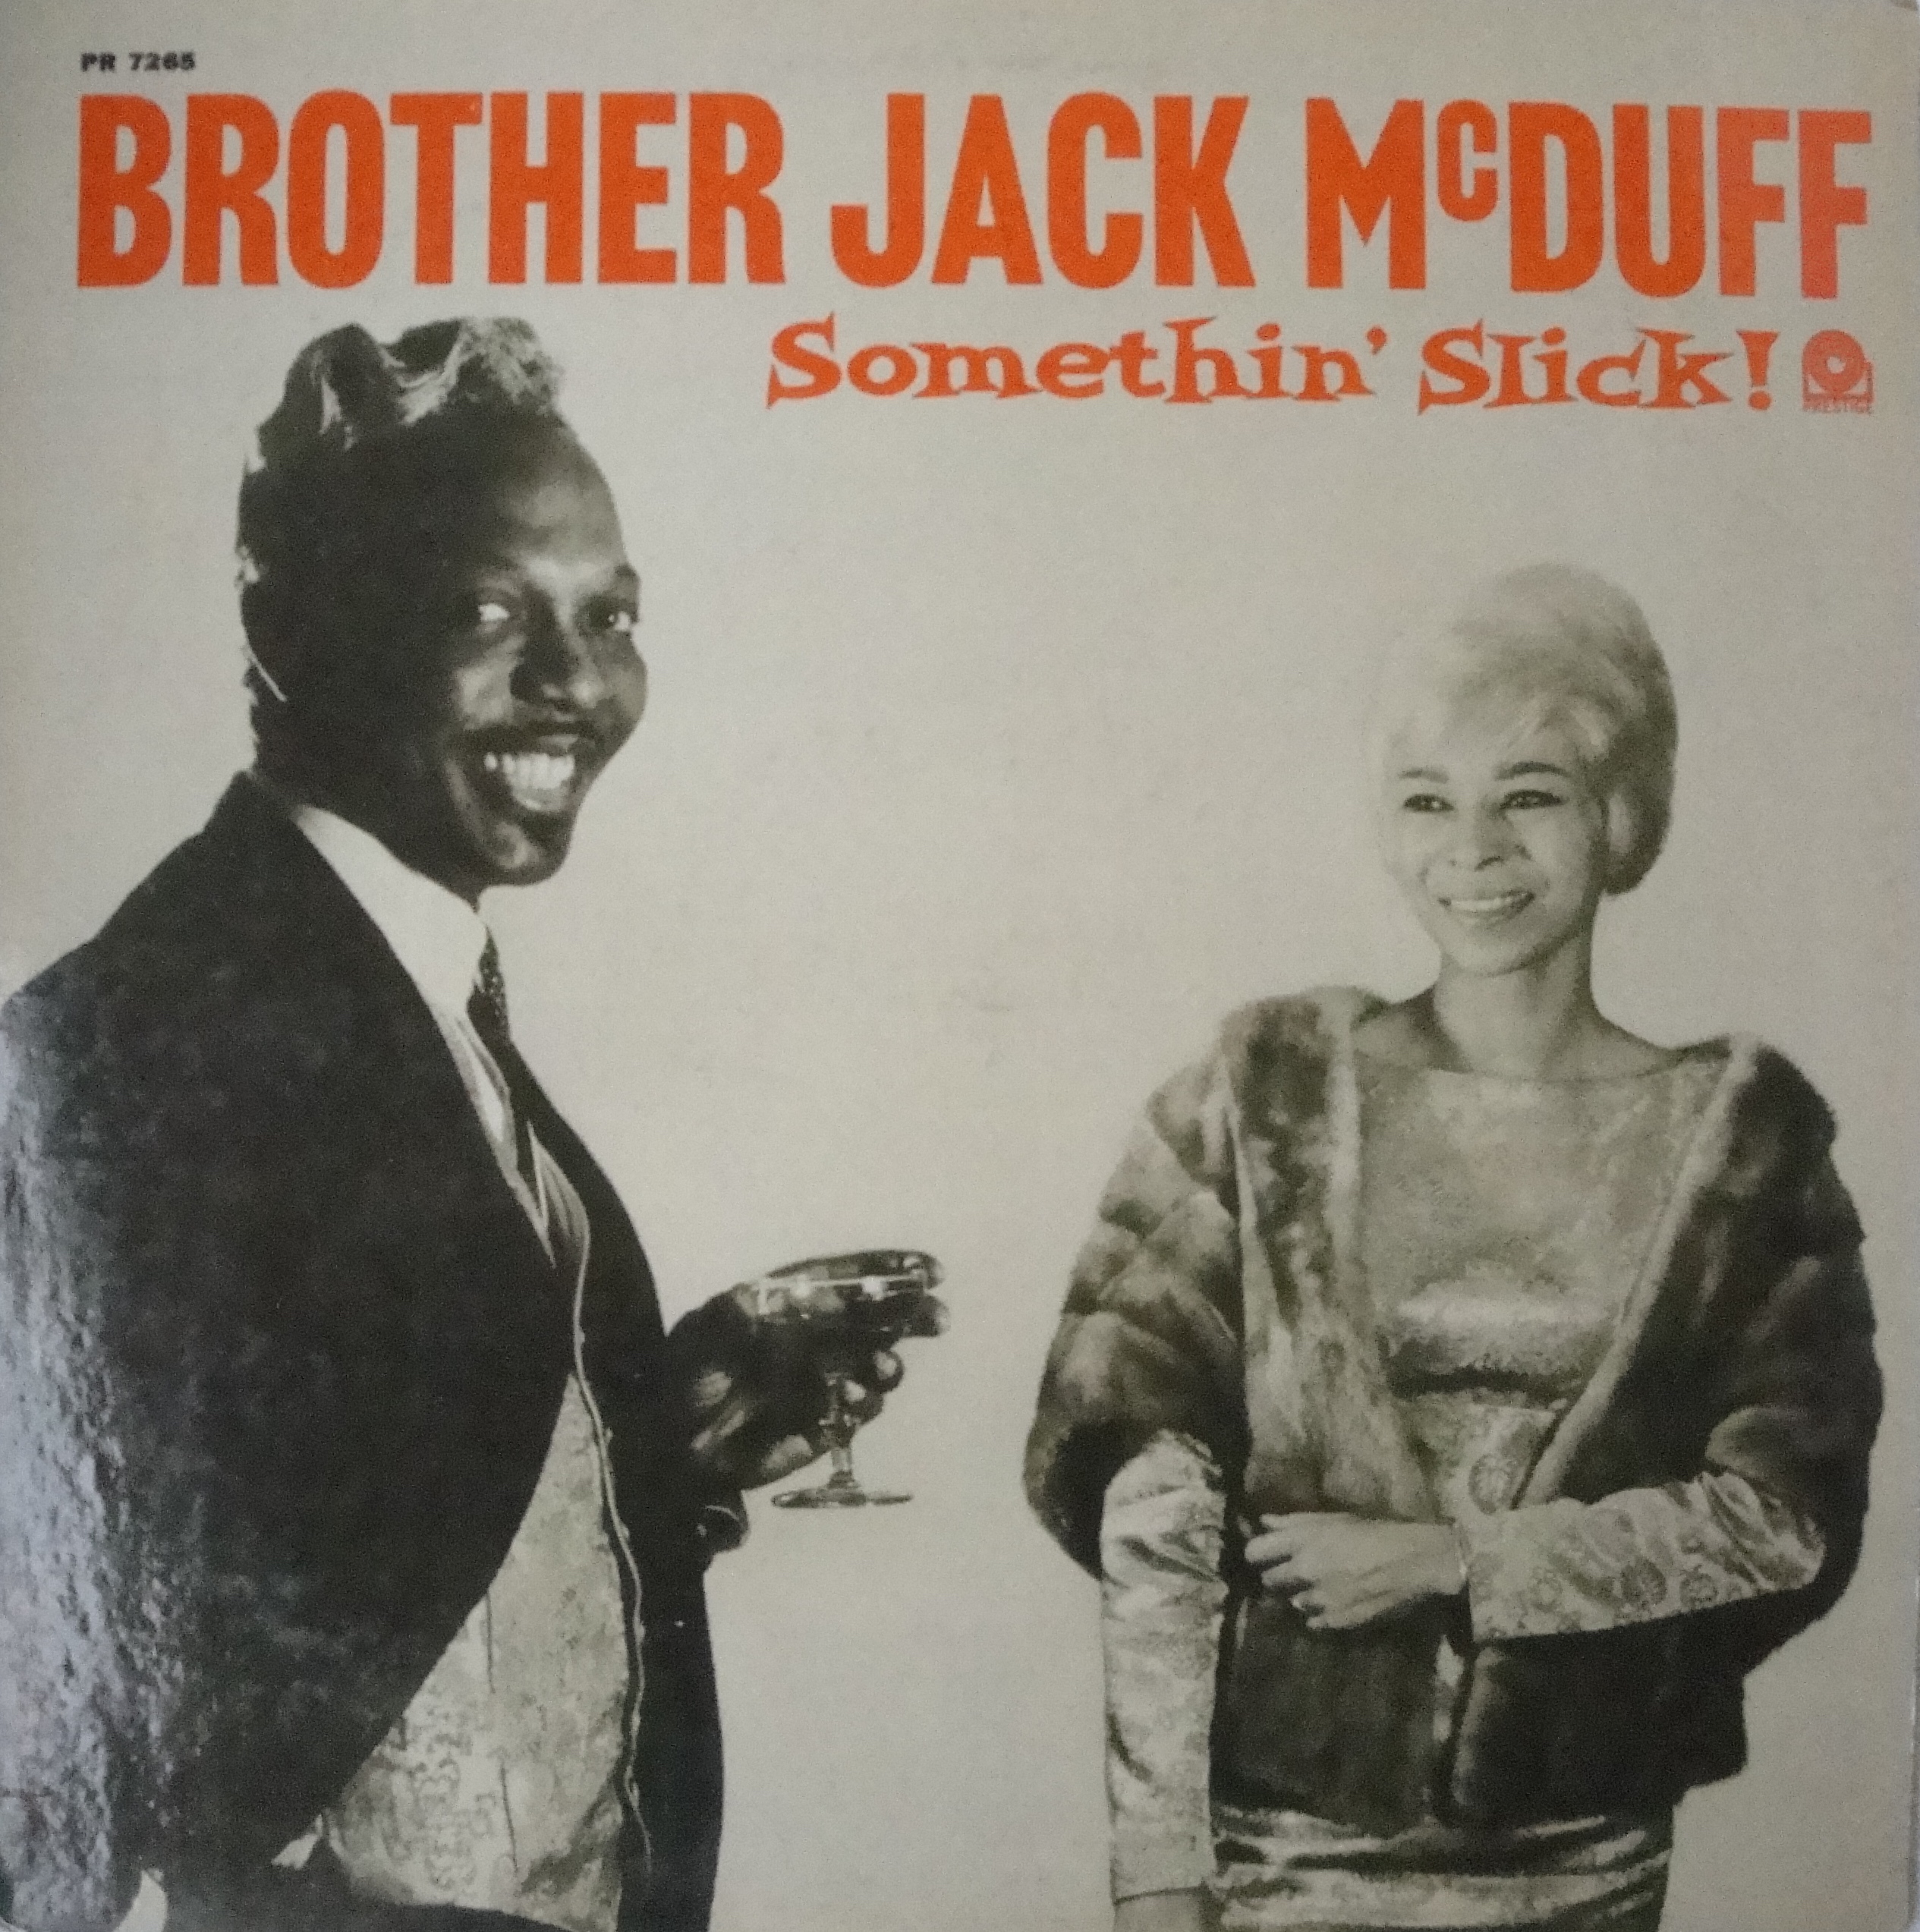 Brother Jack McDuff - Somethin' Slick!